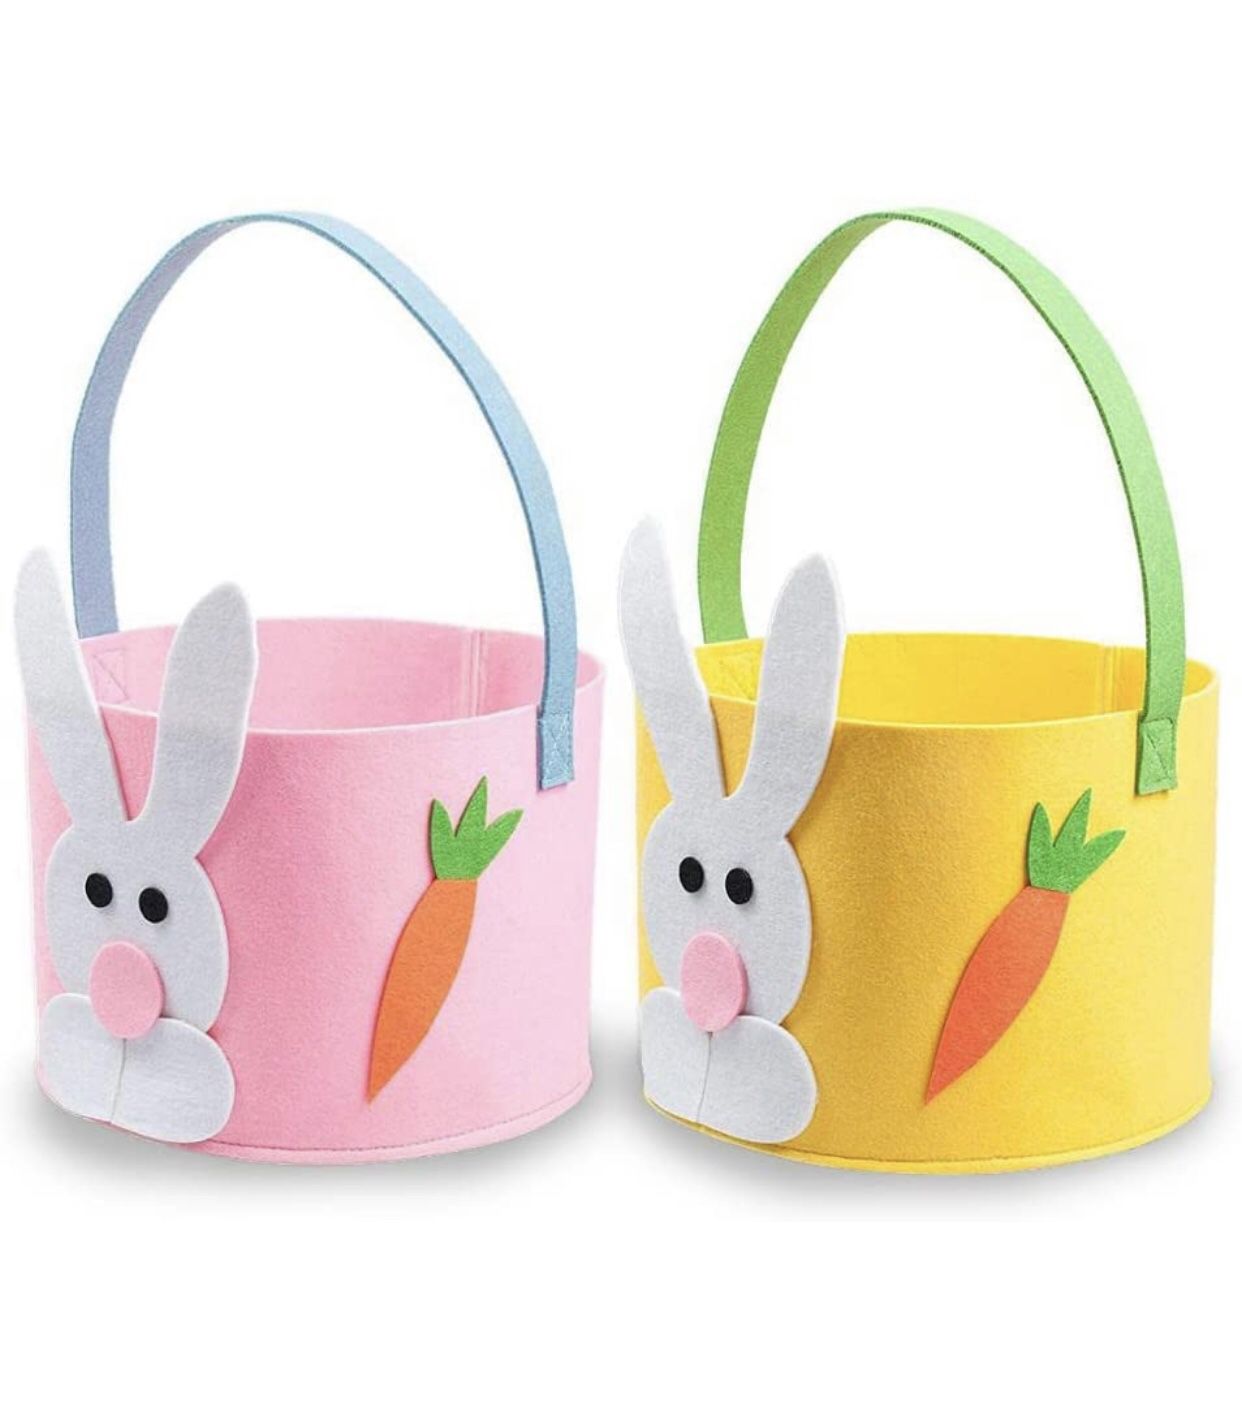  2 Pack Easter Baskets for Kids Empty Felt Bunny Basket Easter Decor Eggs Candy Gifts Storage 